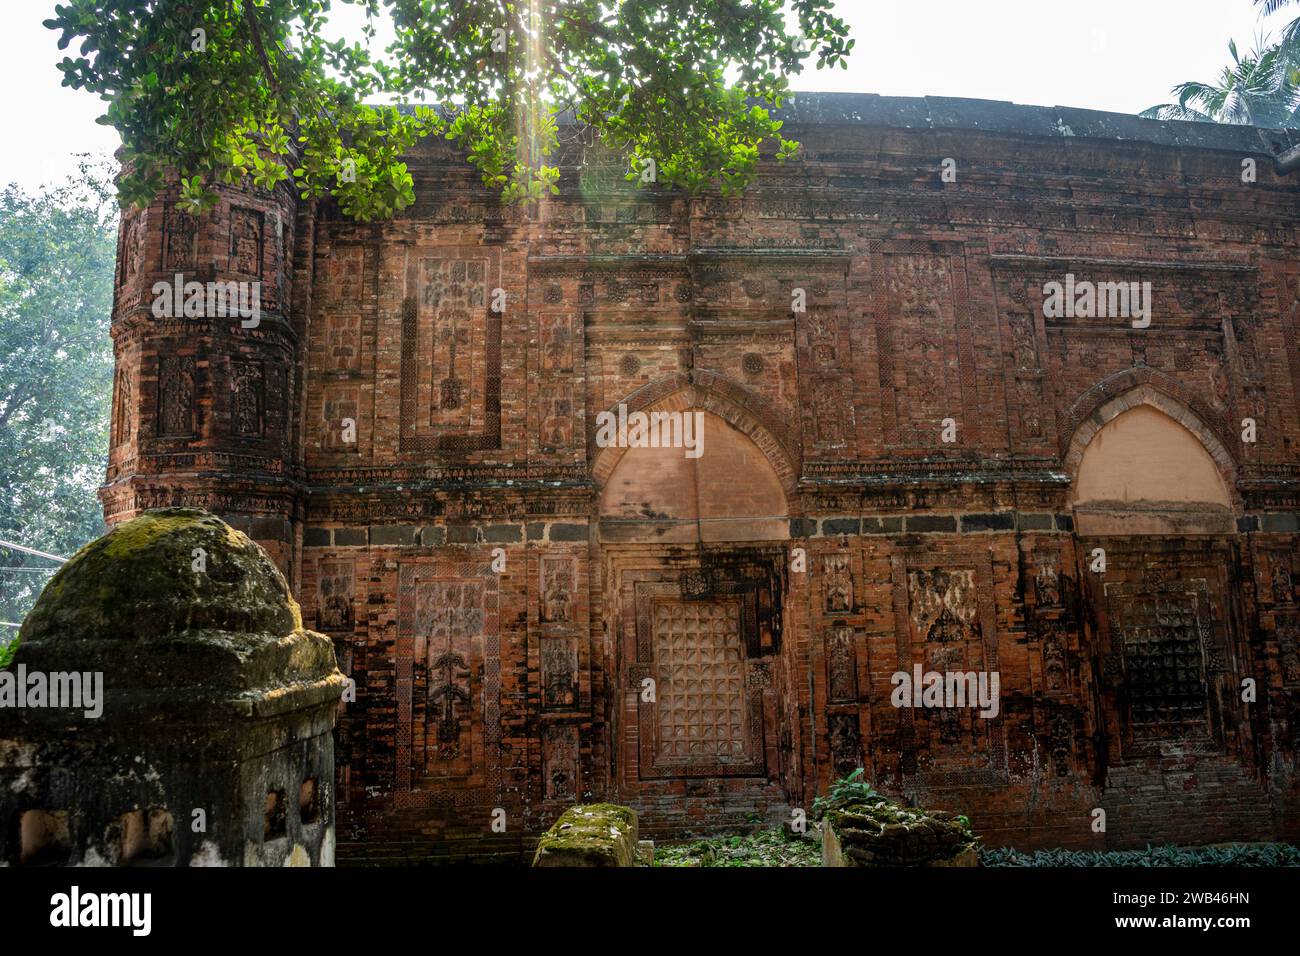 Bagha Mosque, Rajshahi Division, Bangladesh Stock Photo